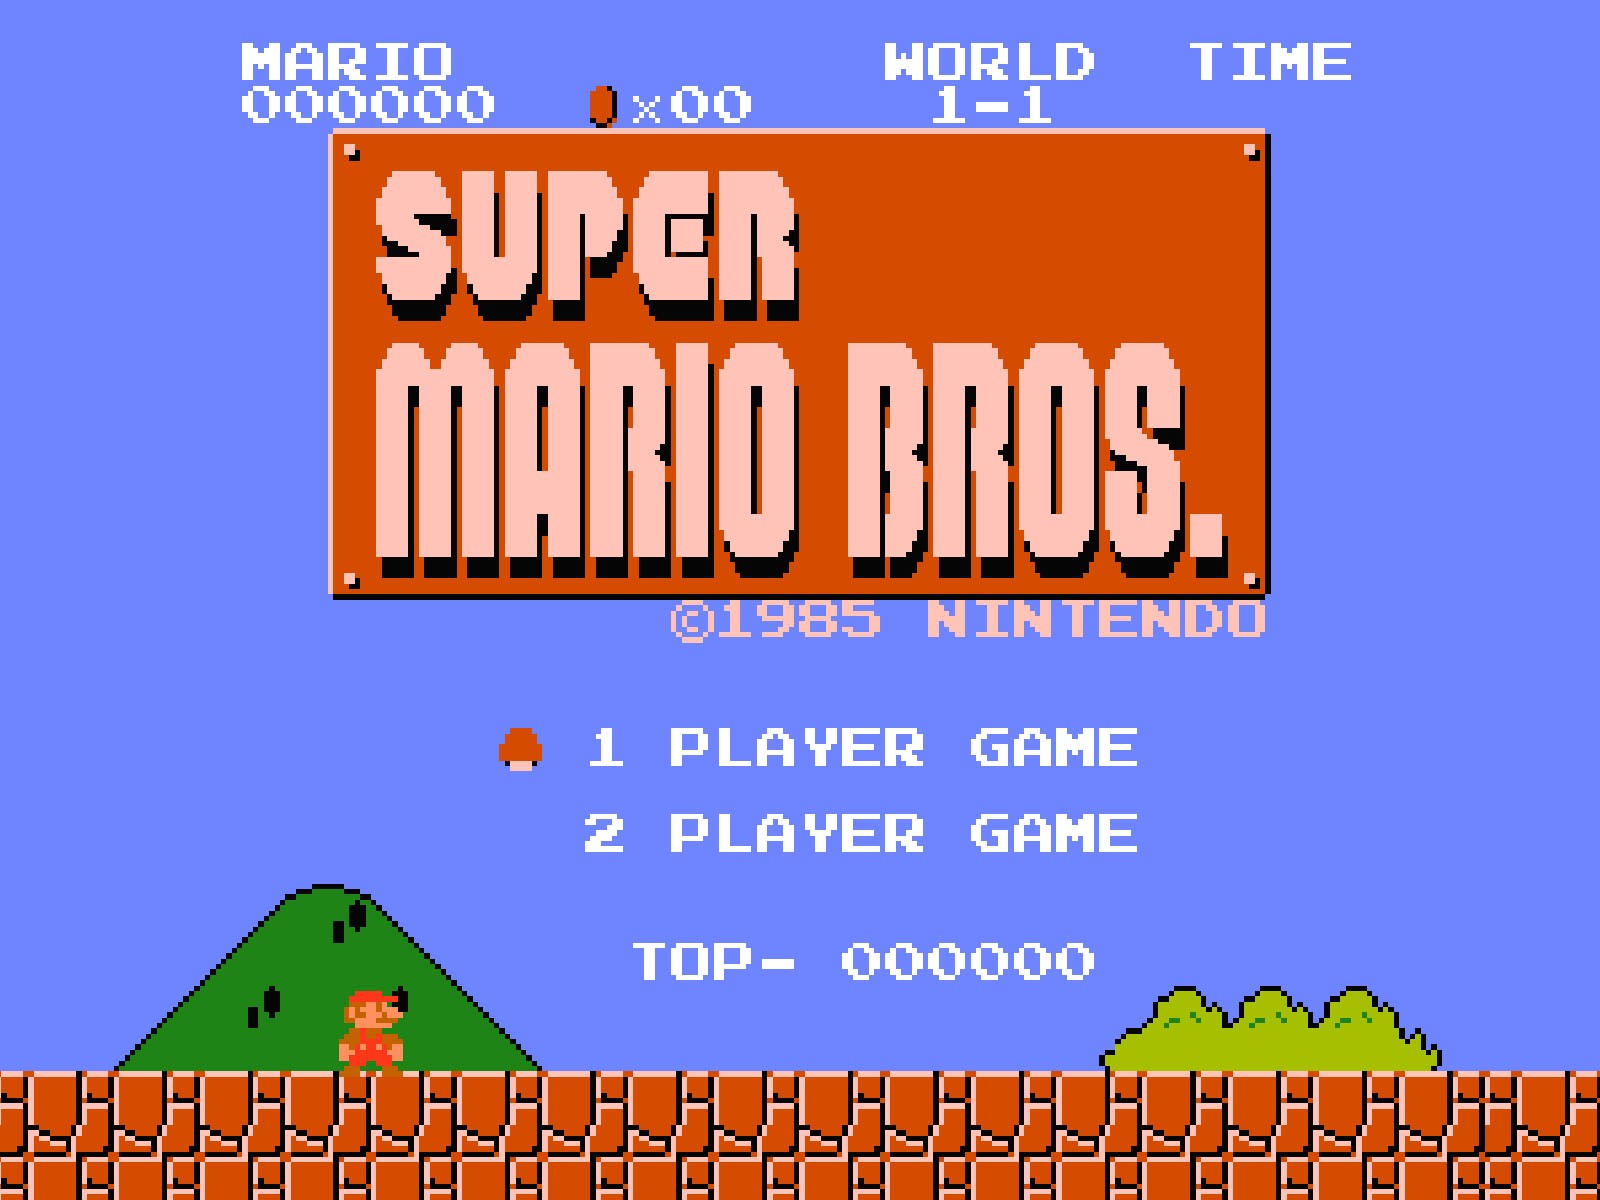 General 1600x1200 Mario Bros. Nintendo Nintendo Entertainment System pixel art pixelated retro games 1985 (Year) video games numbers